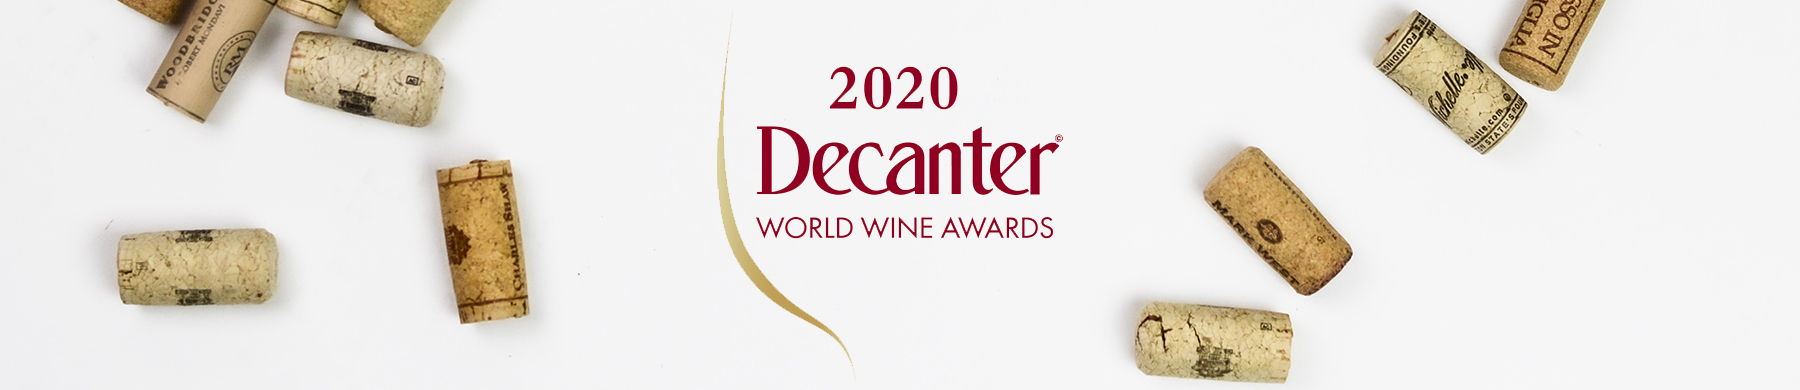 Tre medaglie dai Decanter World Wine Award 2020